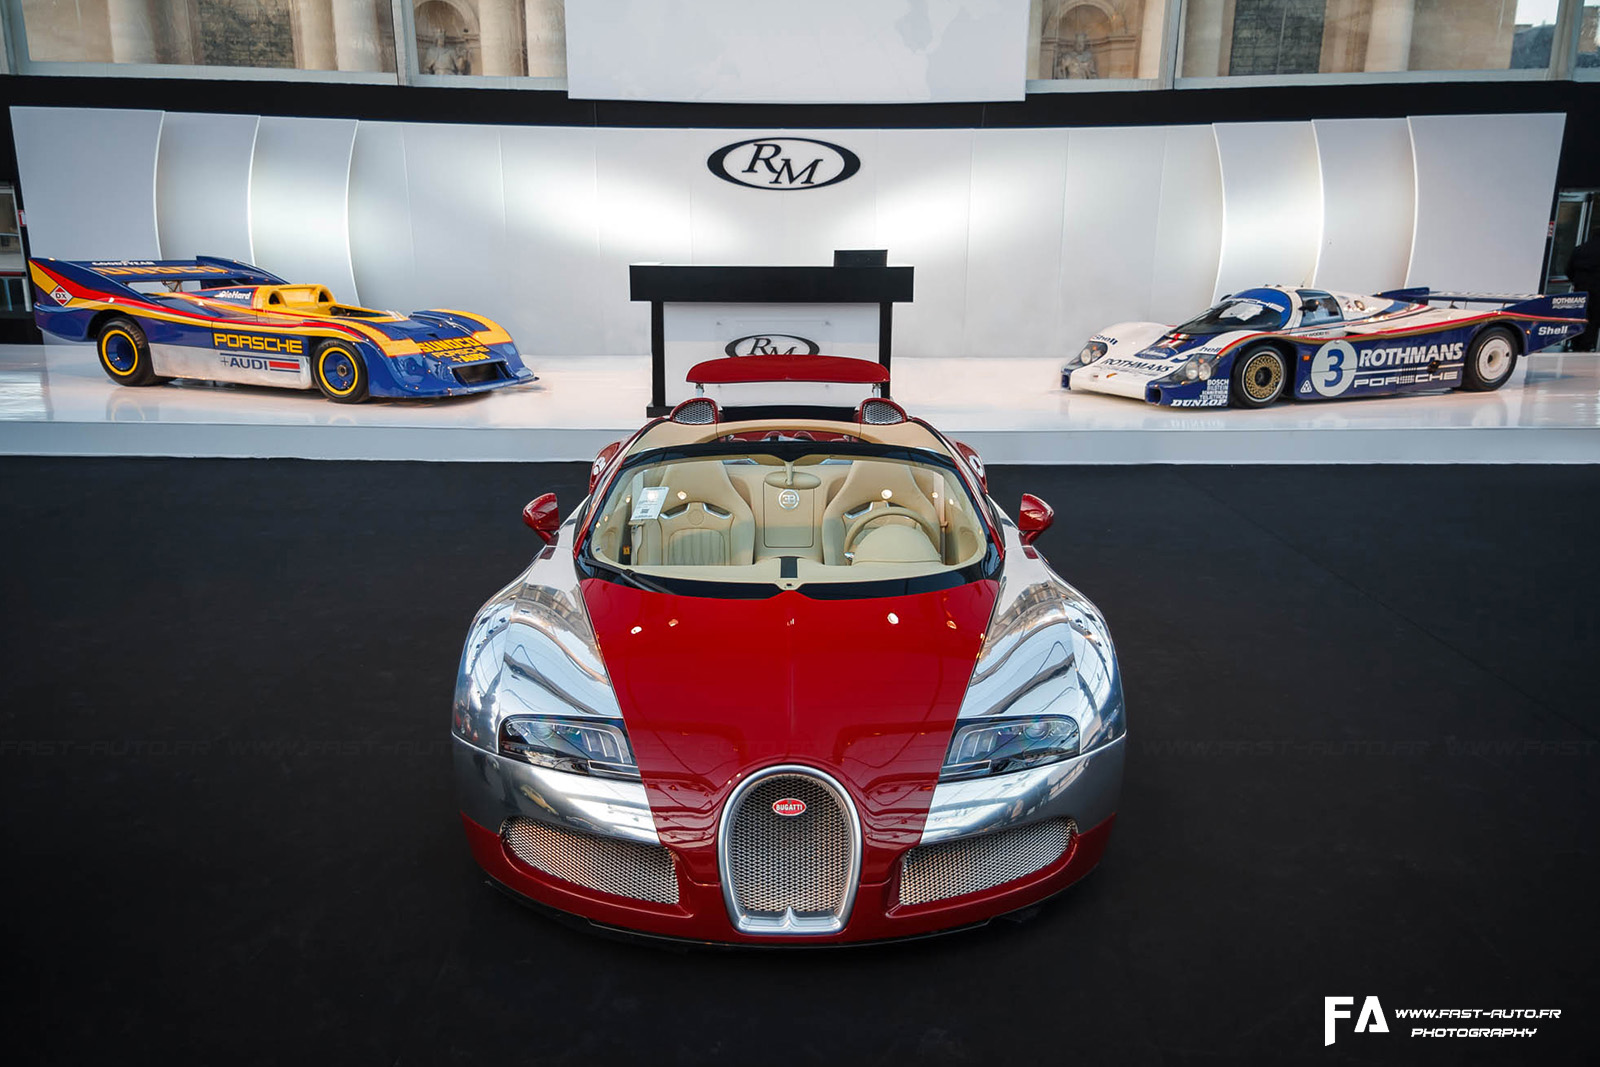 bugatti-veyron-grandsport-rm-auctions-60.jpg